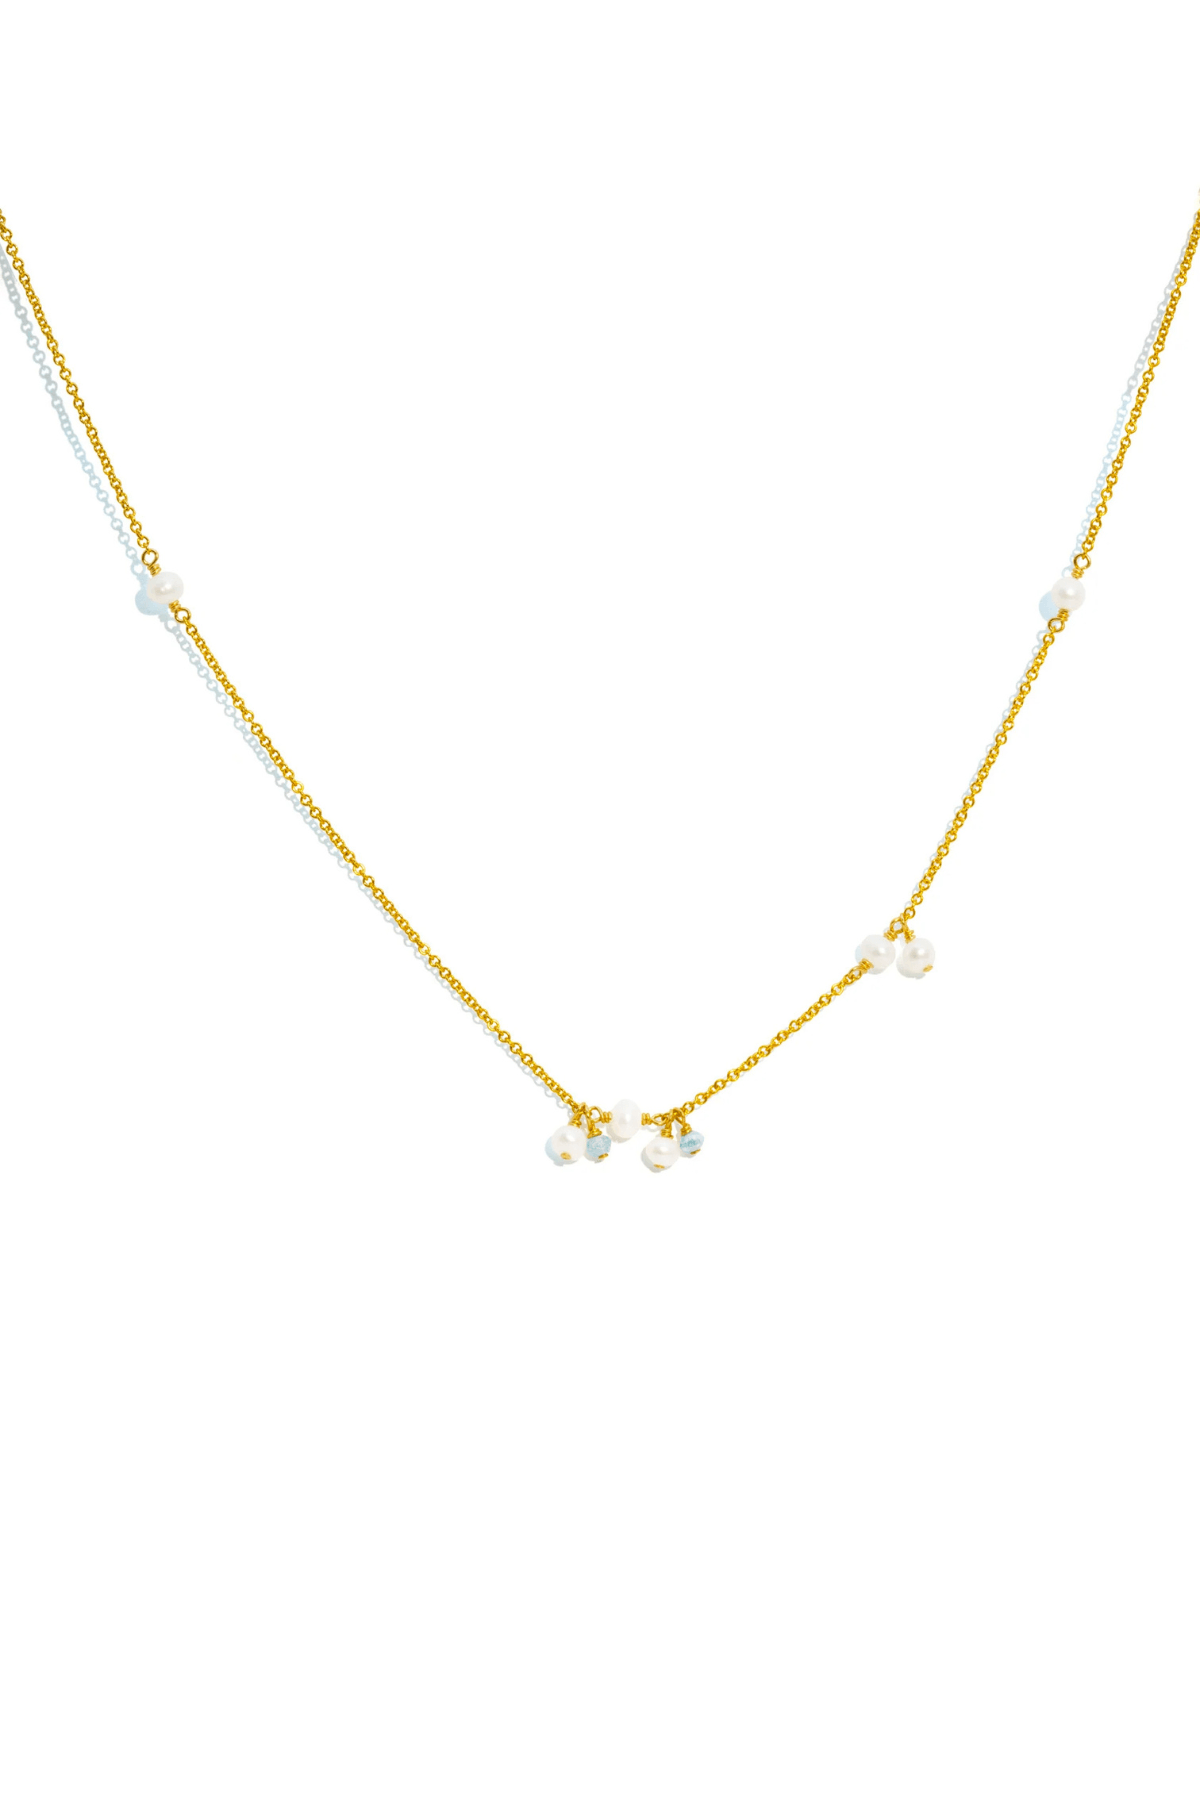 The Gold Petrichor Aquamarine Necklace